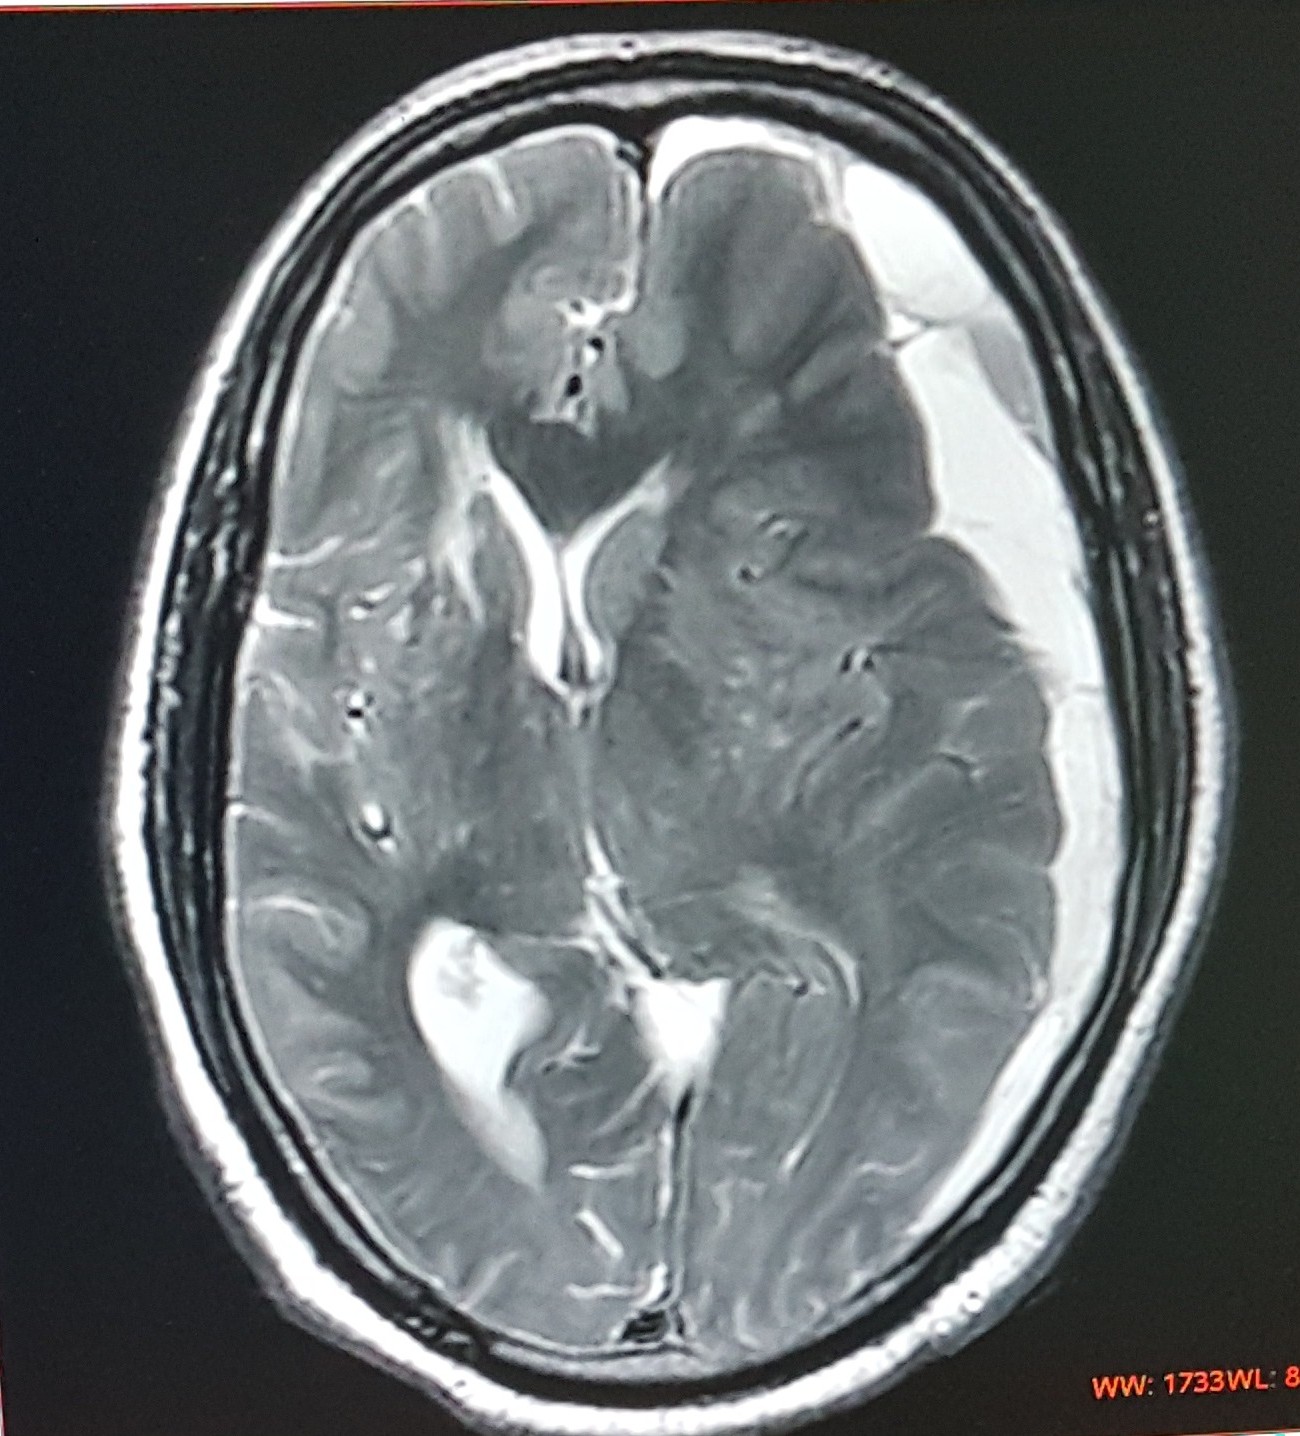 MRI BEFORE OPERATION / GPN / 12.12.17